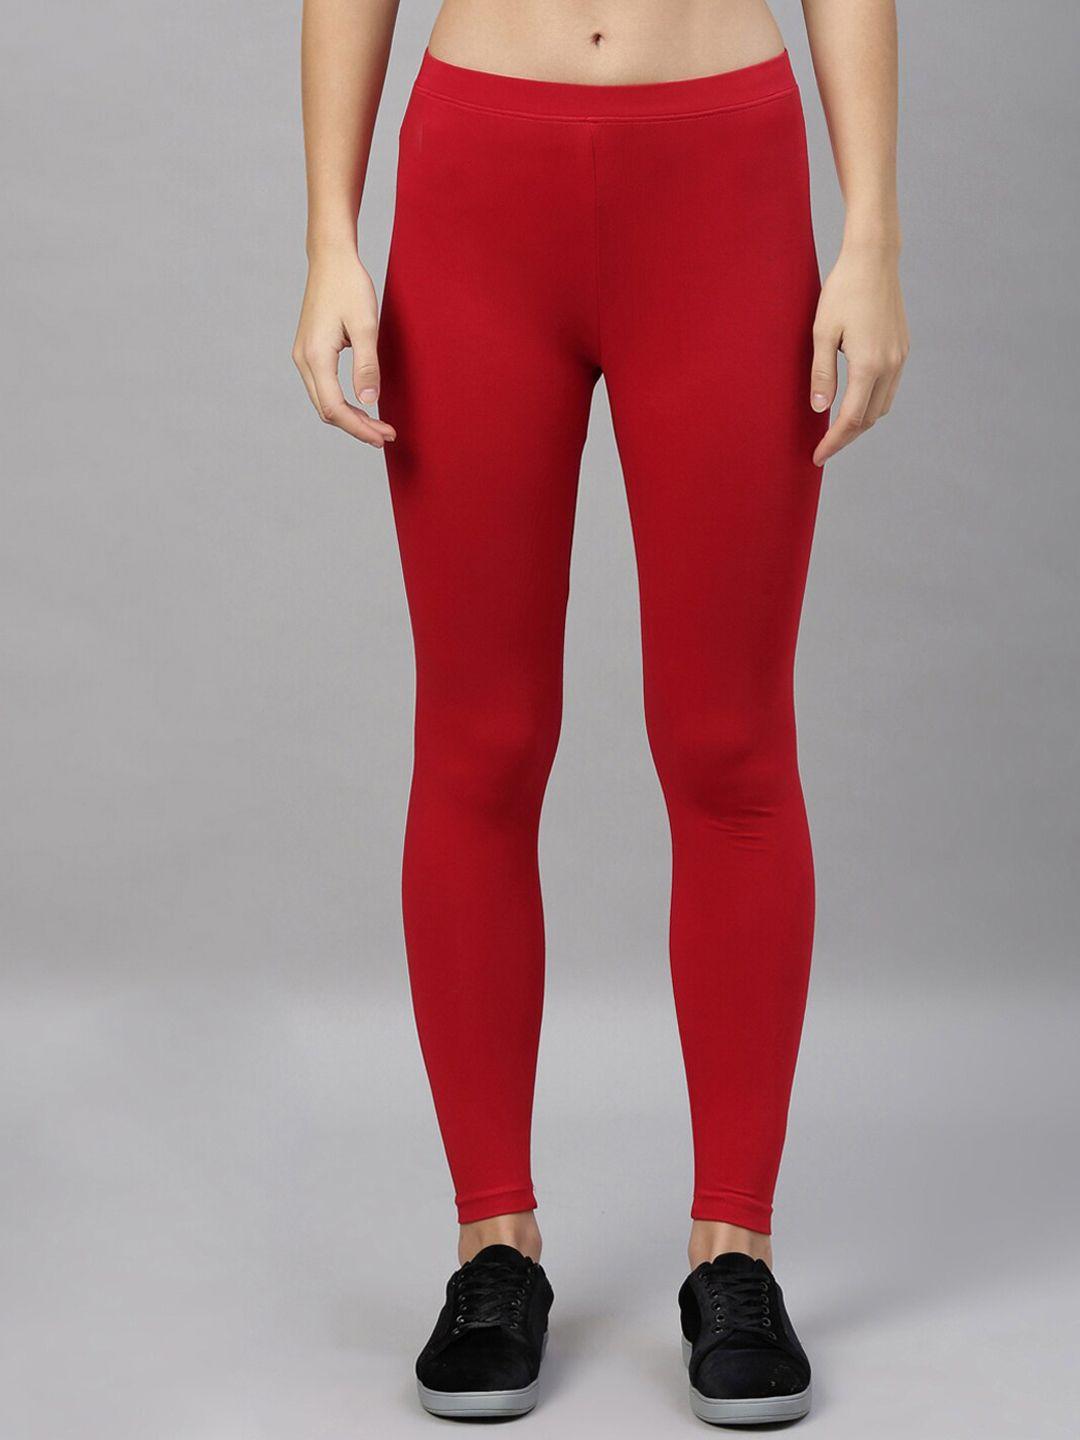 kryptic women red solid ankle length leggings